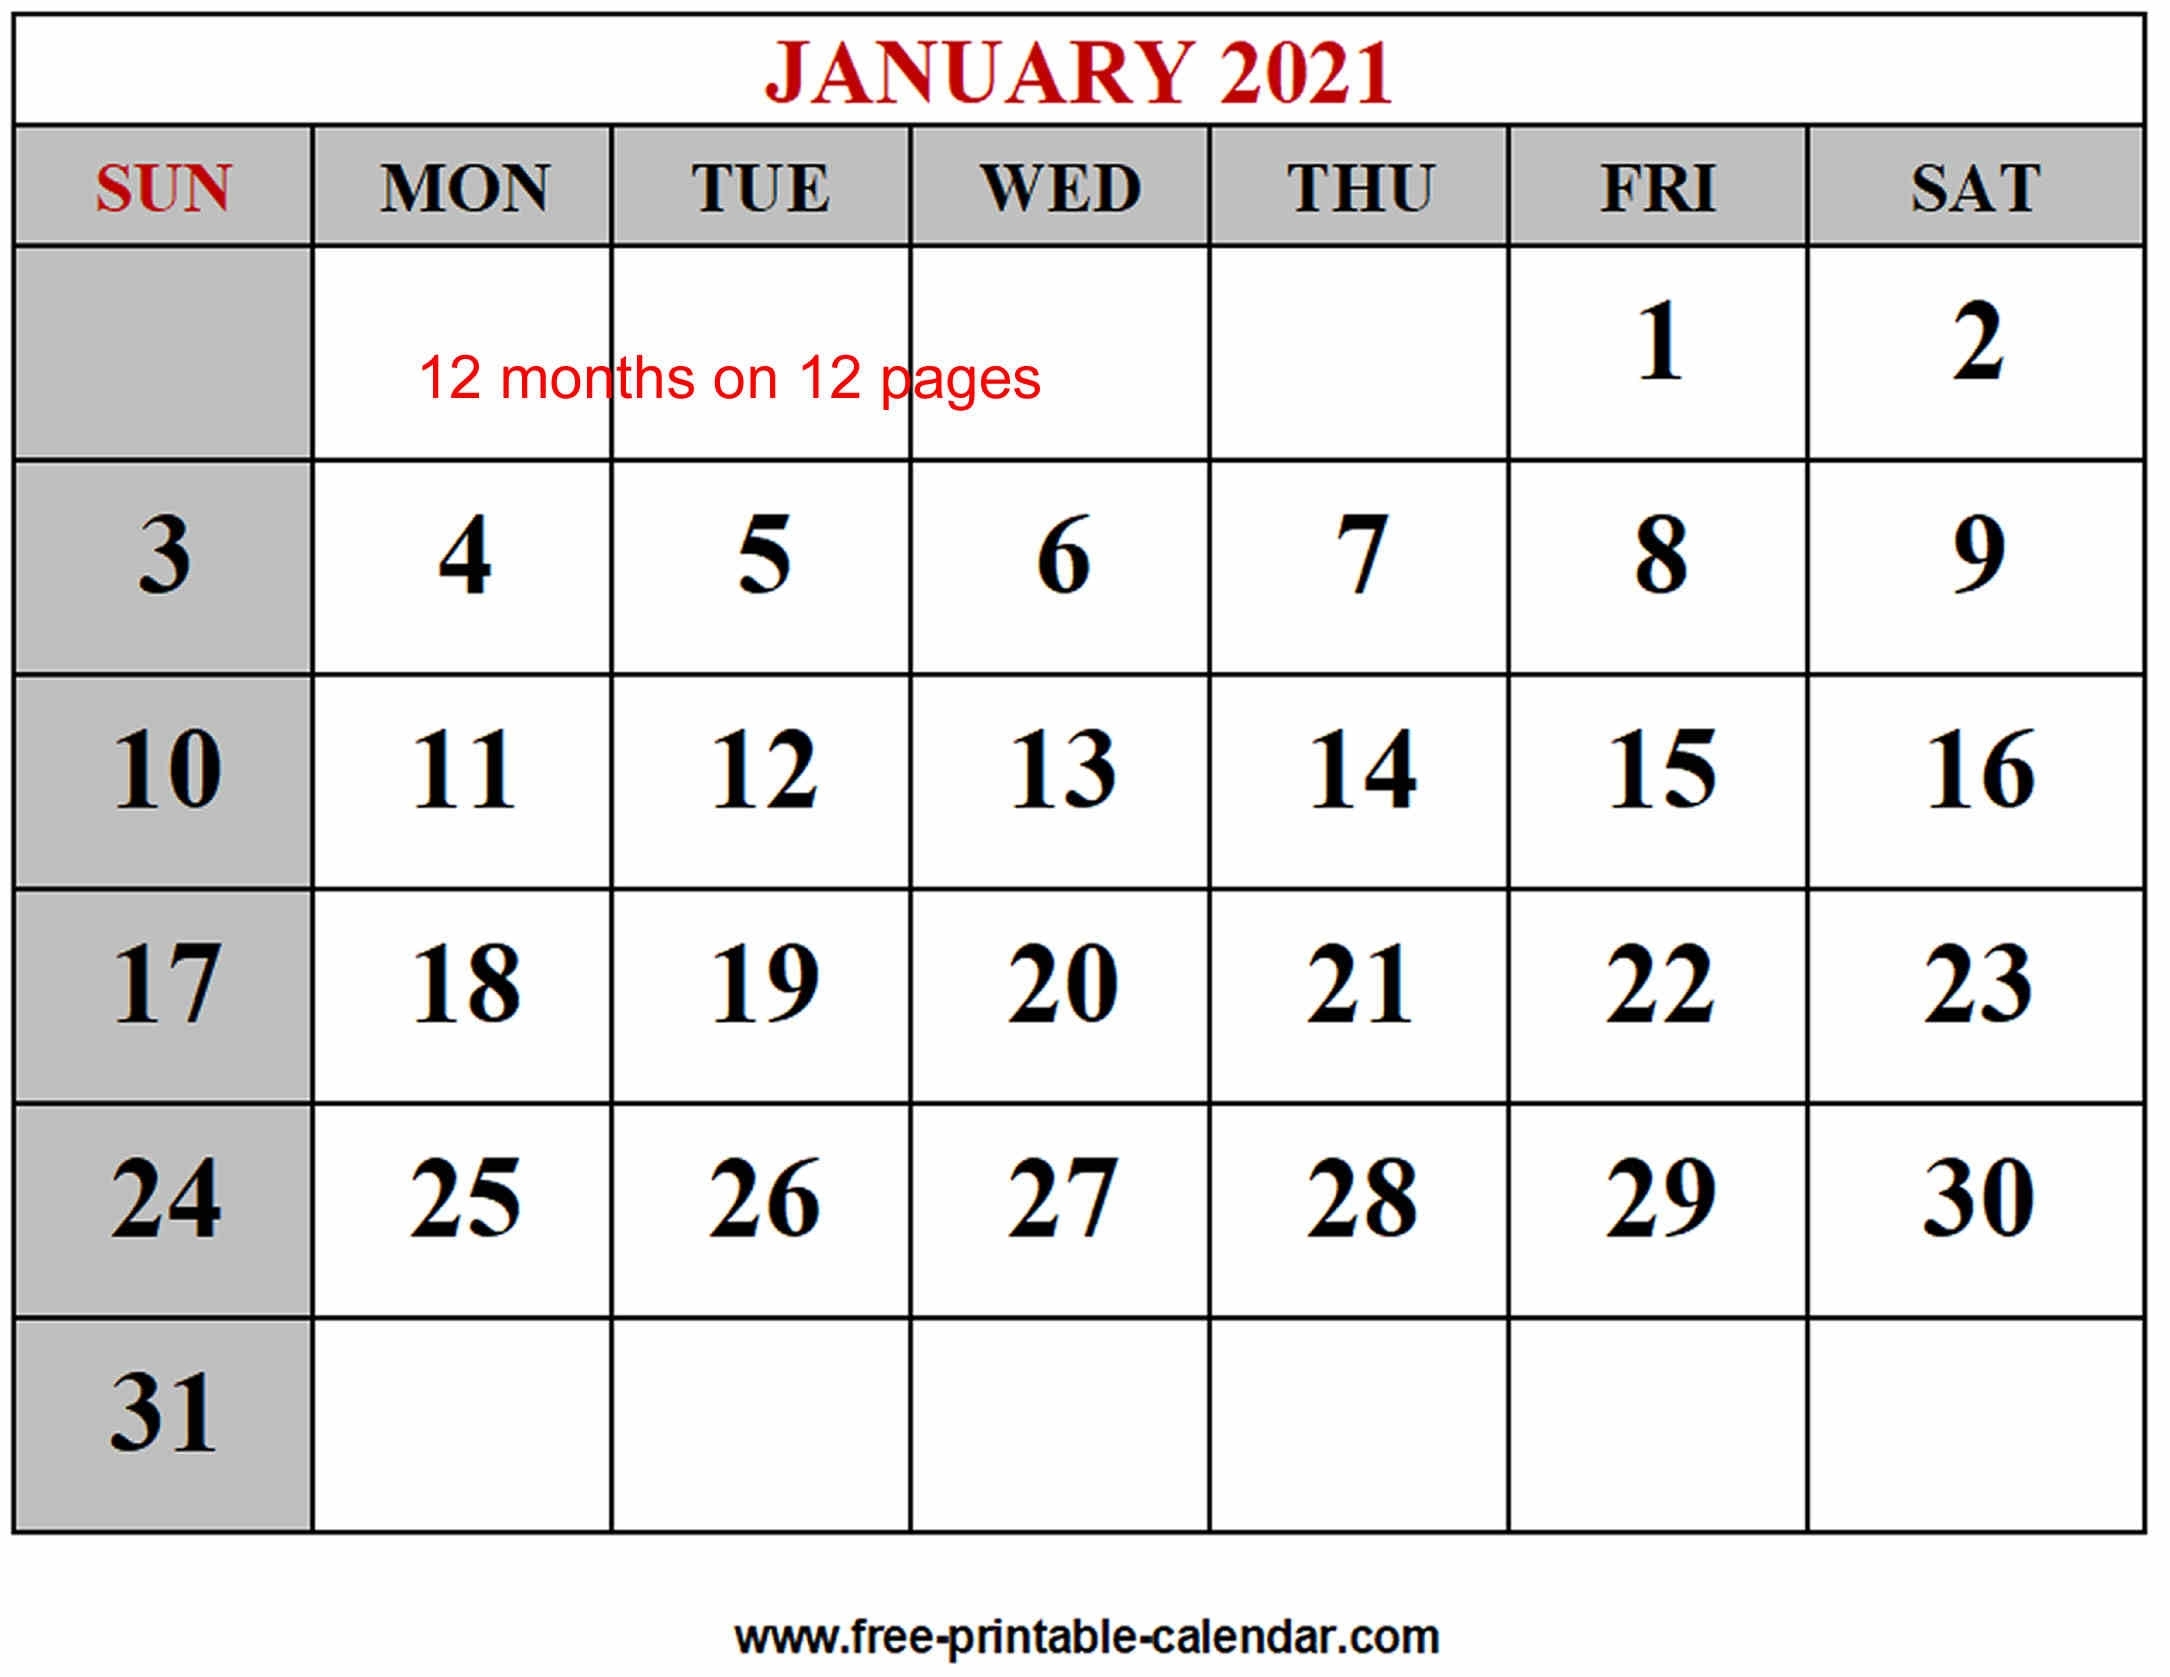 Year 2021 Calendar Templates - Free-Printable-Calendar